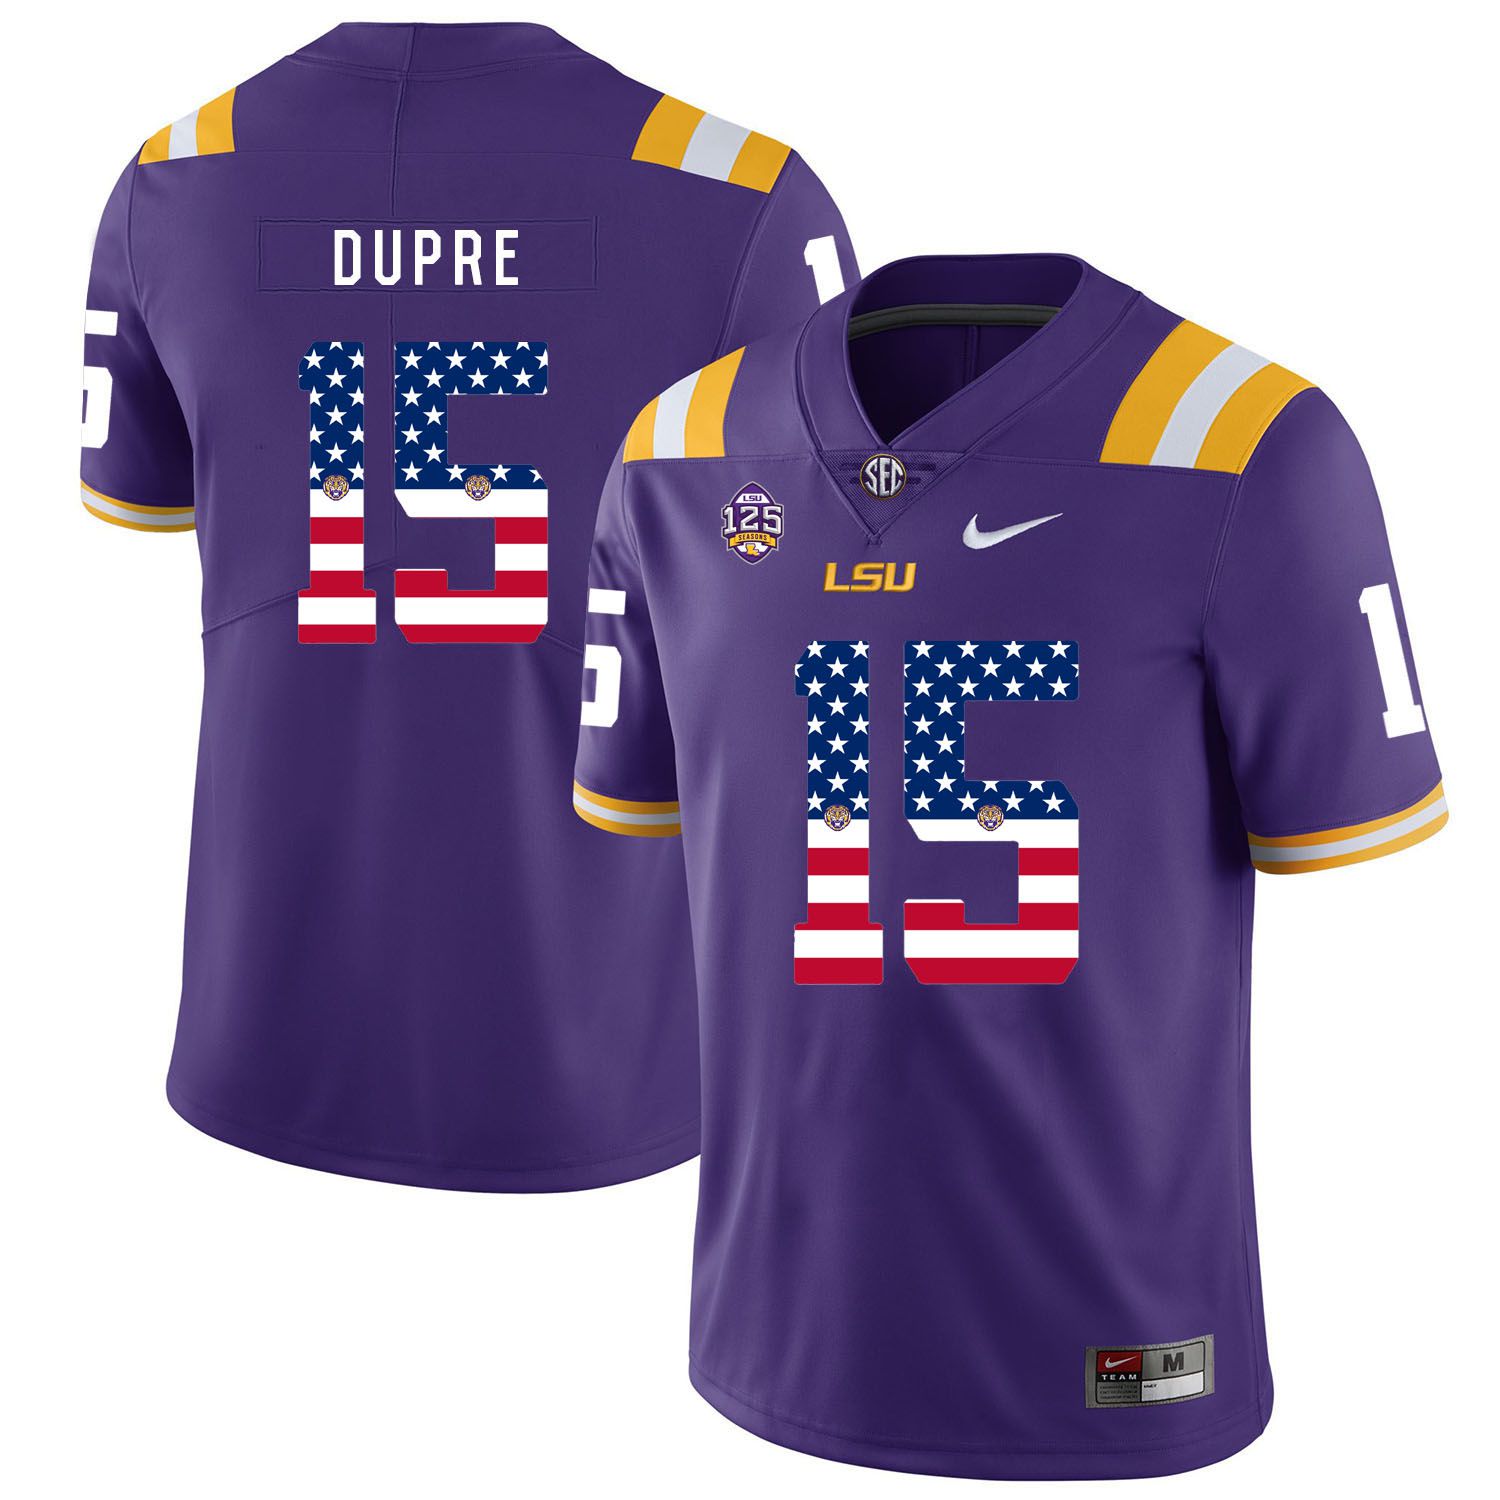 Men LSU Tigers 15 Dupre Purple Flag Customized NCAA Jerseys